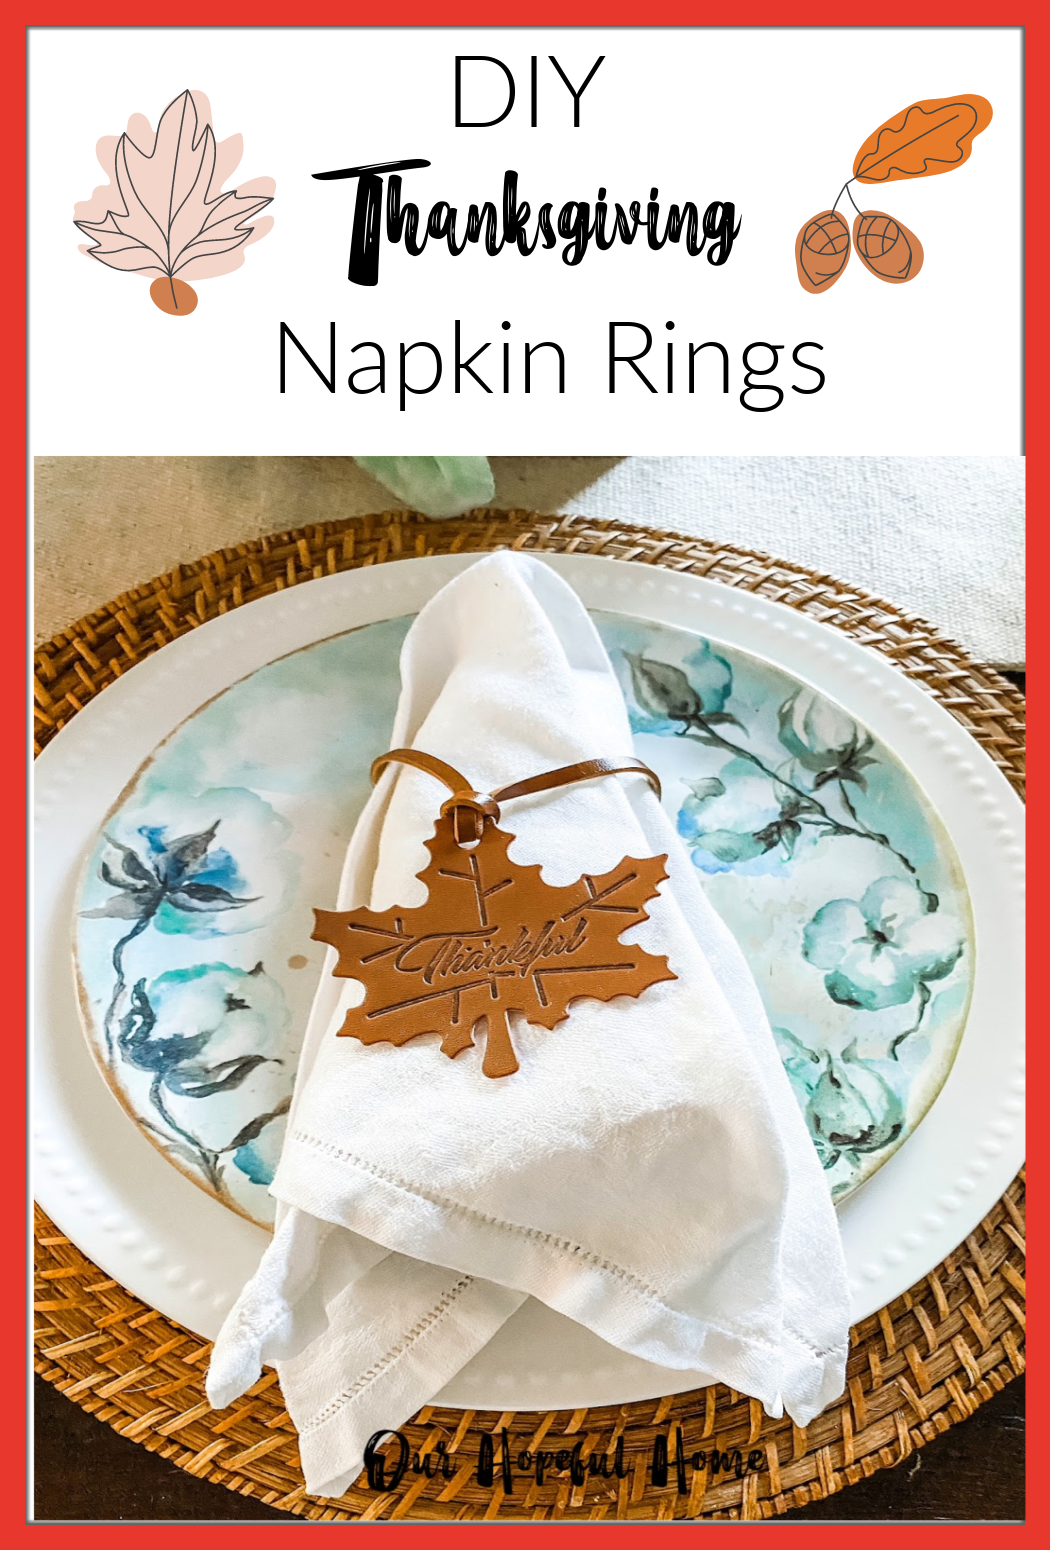 DIY Napkin Ring Ideas - How to Make Thanksgiving Napkin Rings